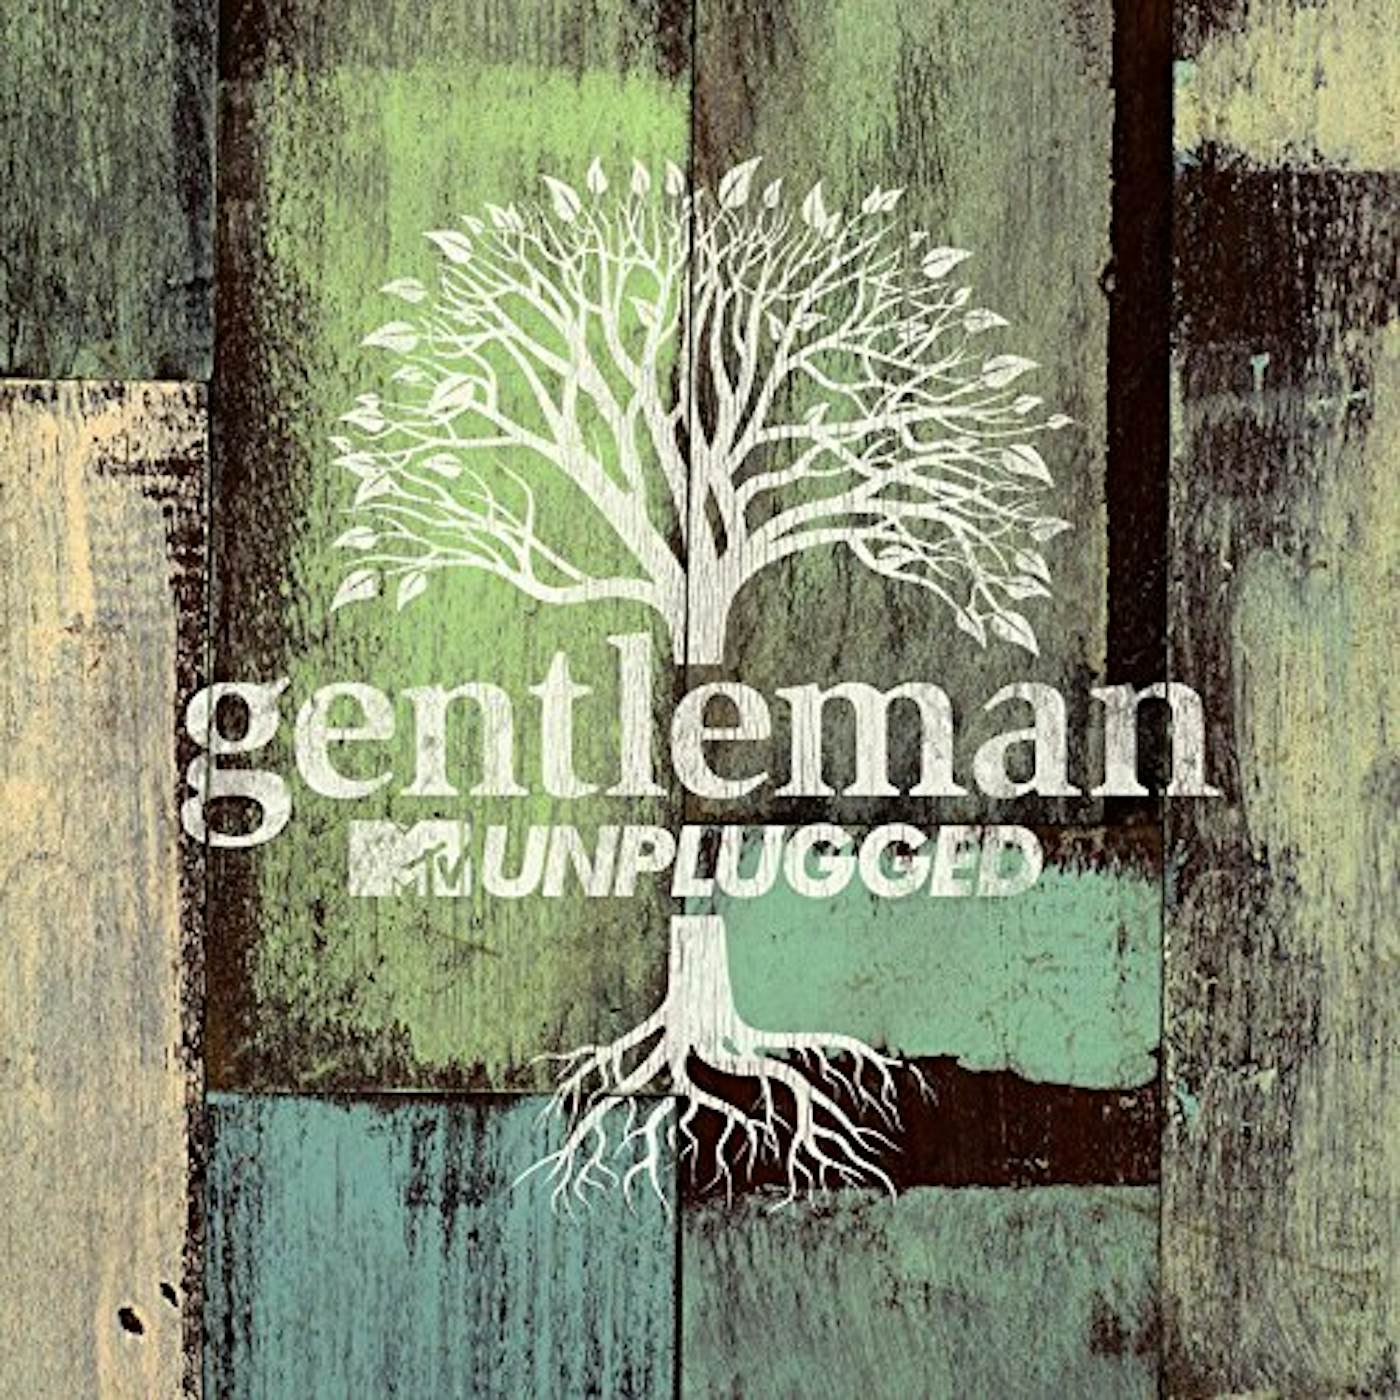 Gentleman MTV UNPLUGGED CD